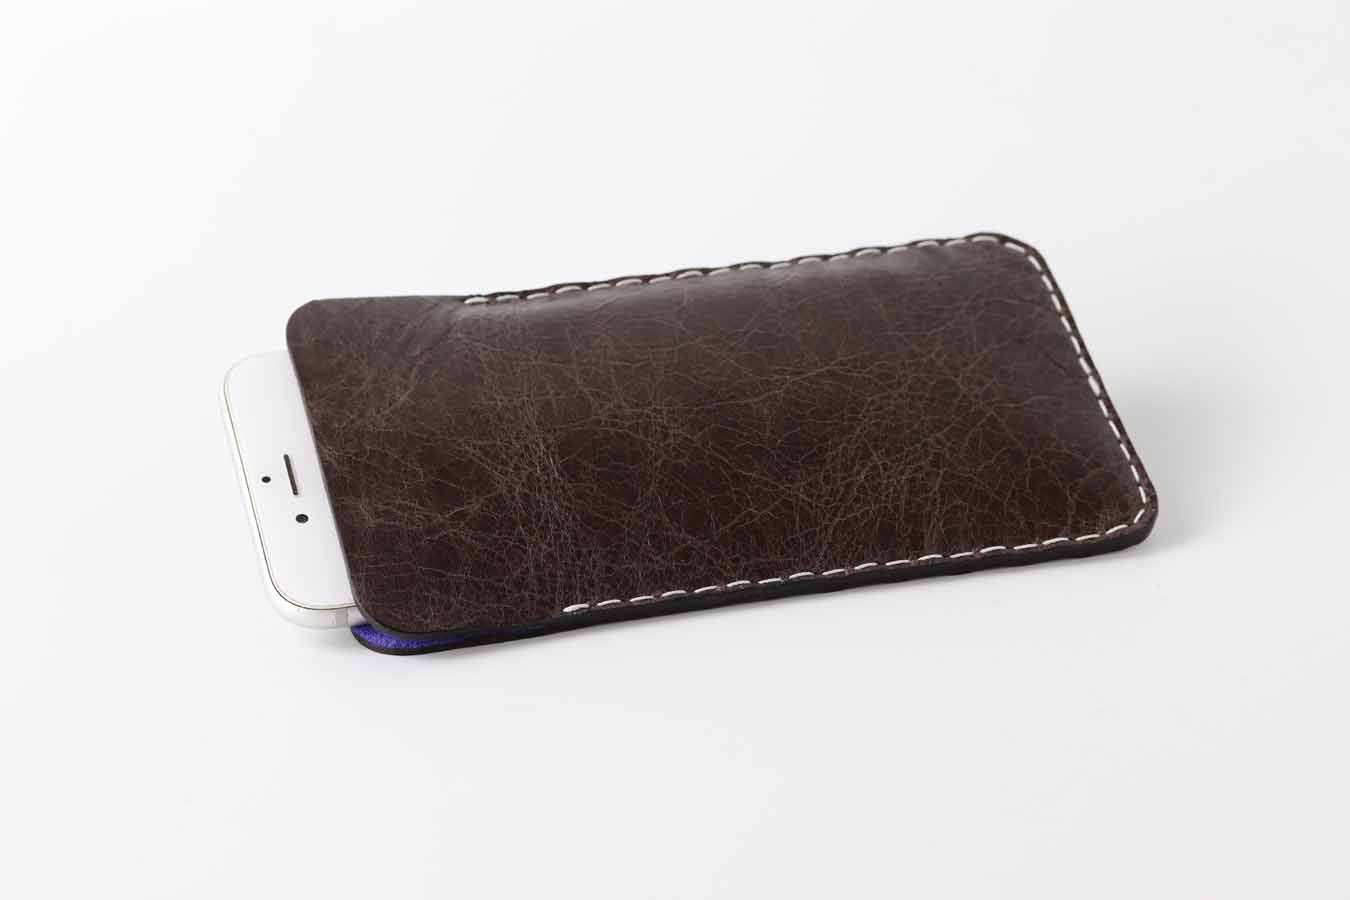 iPhone 12 pro max black leather sleeve case